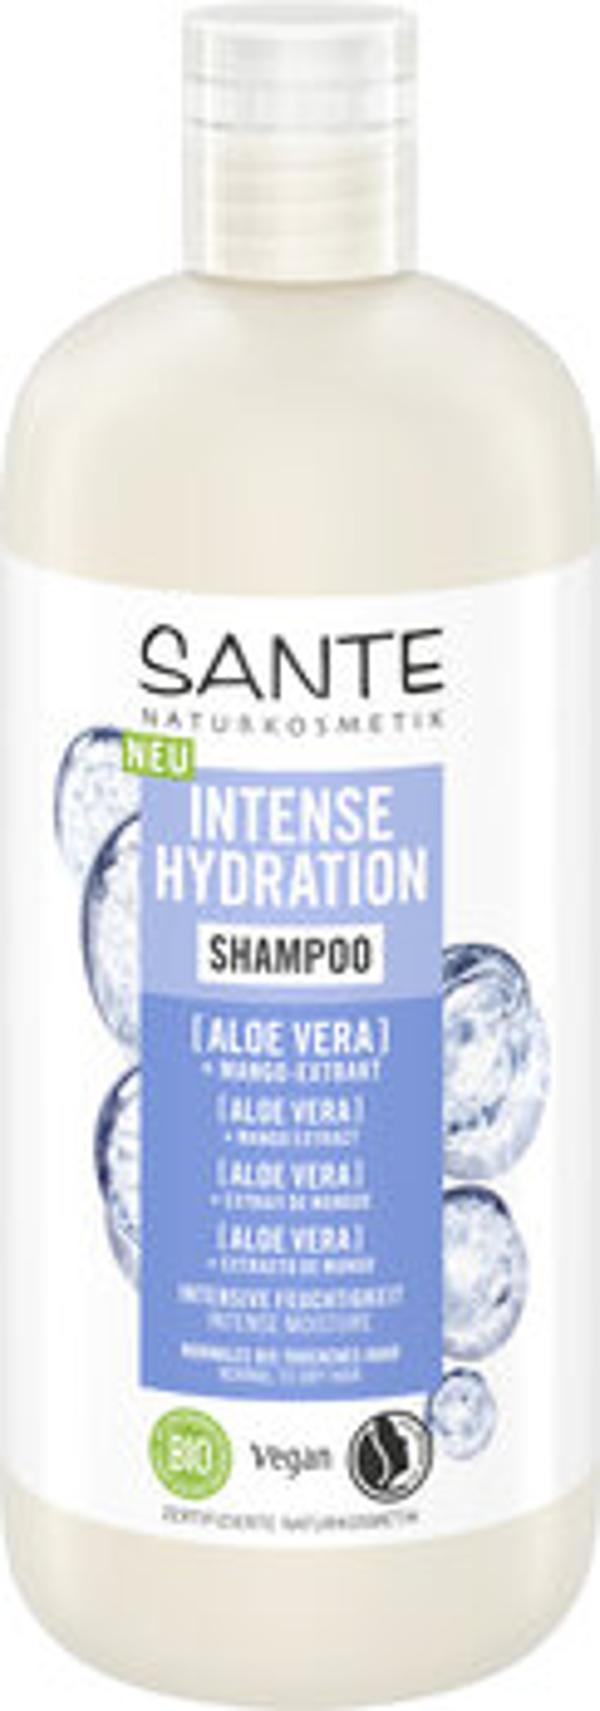 Produktfoto zu Intense Hydration Shampoo Hyaluron 500ml